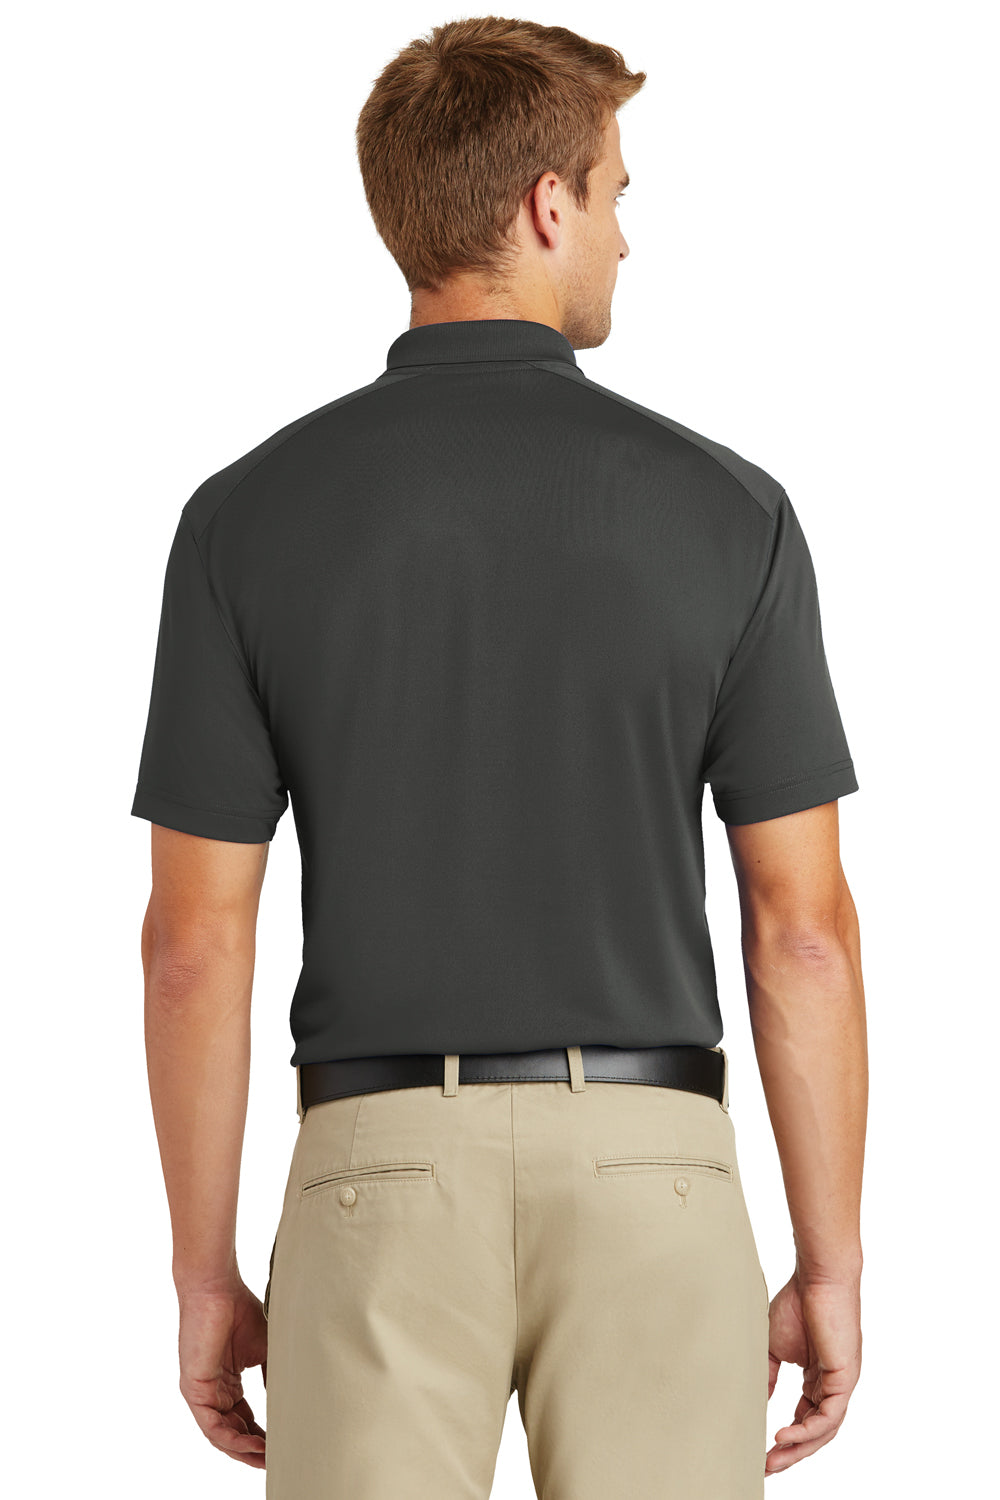 CornerStone CS418 Mens Select Moisture Wicking Short Sleeve Polo Shirt Charcoal Grey Back